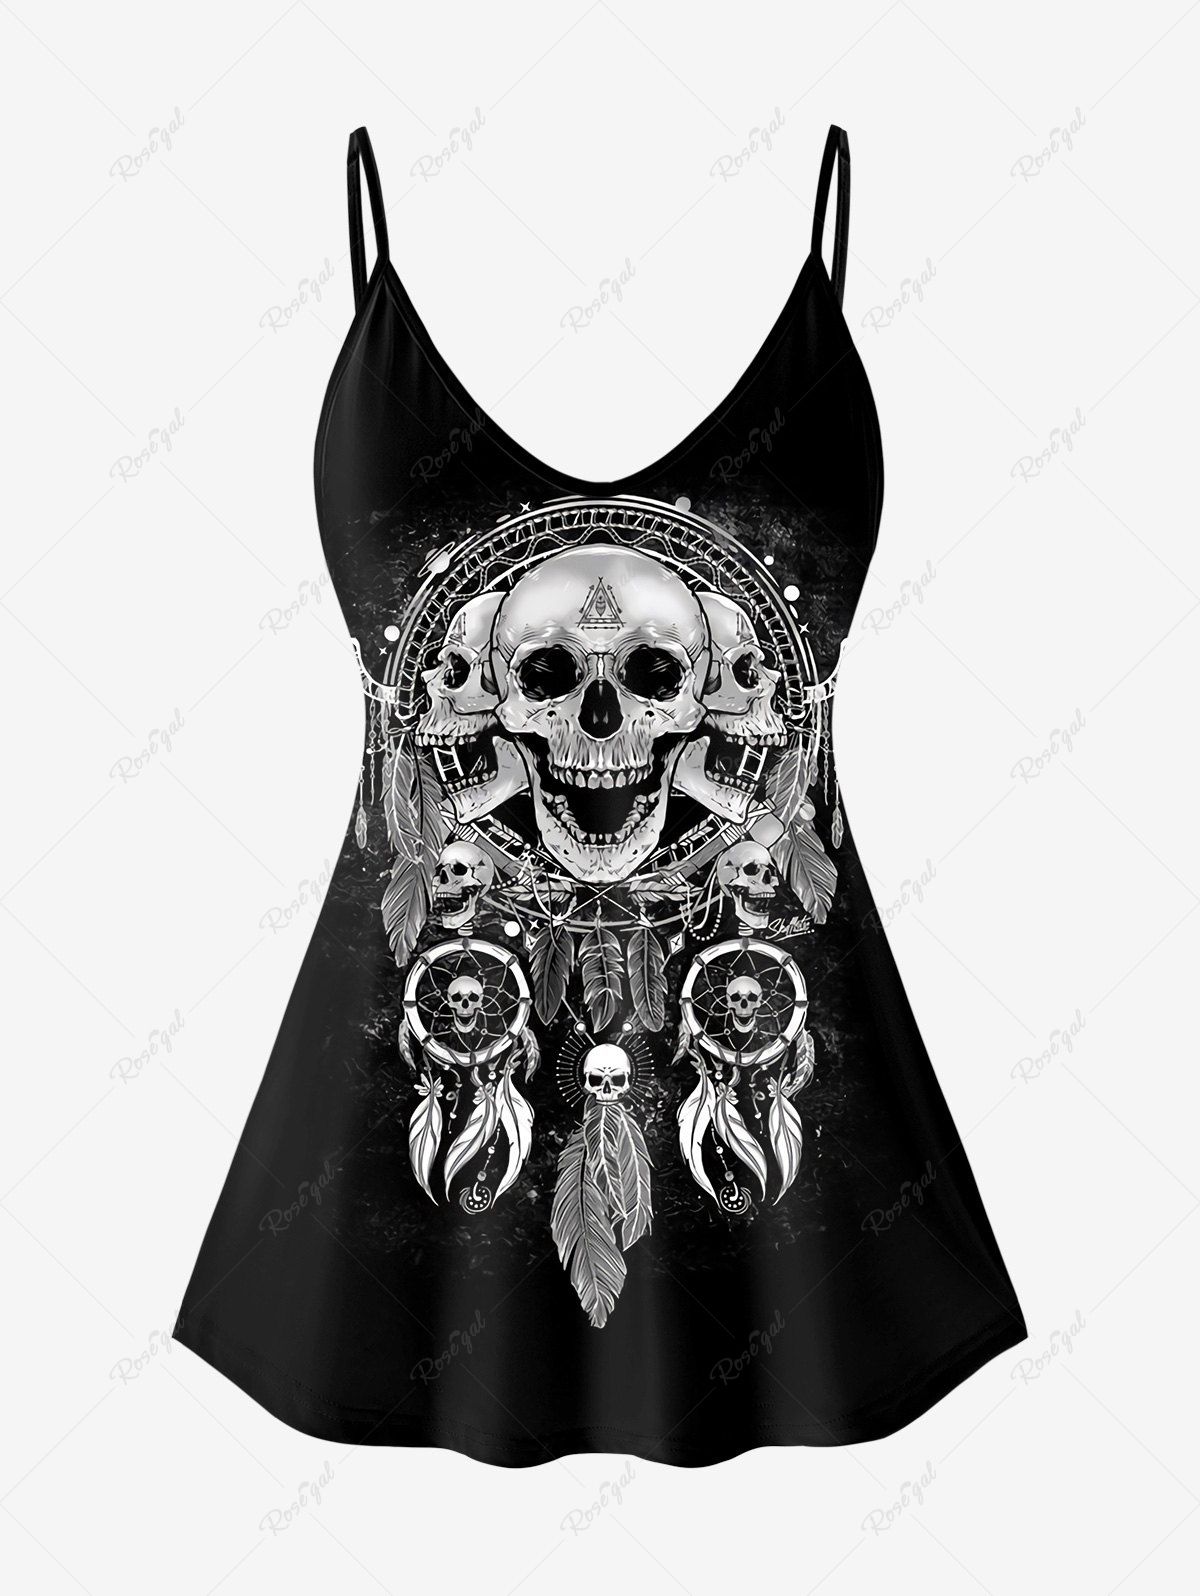 Fancy Gothic Skull Dreamcatcher Print Cami Top (Adjustable Straps)  